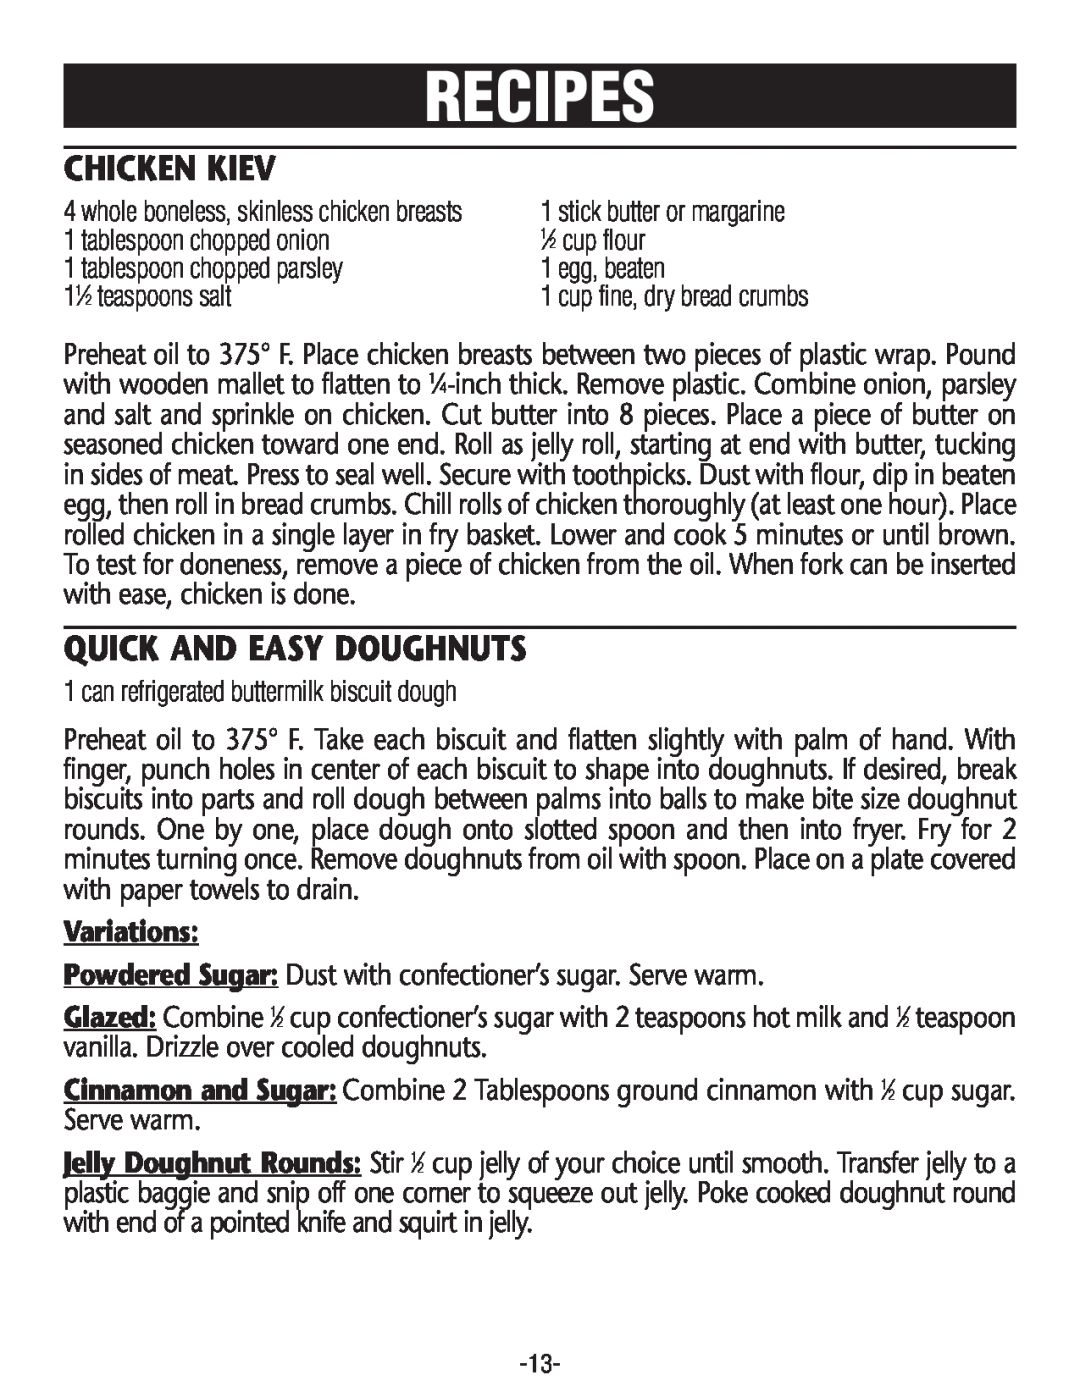 Rival CF154 manual Chicken Kiev, Quick And Easy Doughnuts, Recipes, Variations 